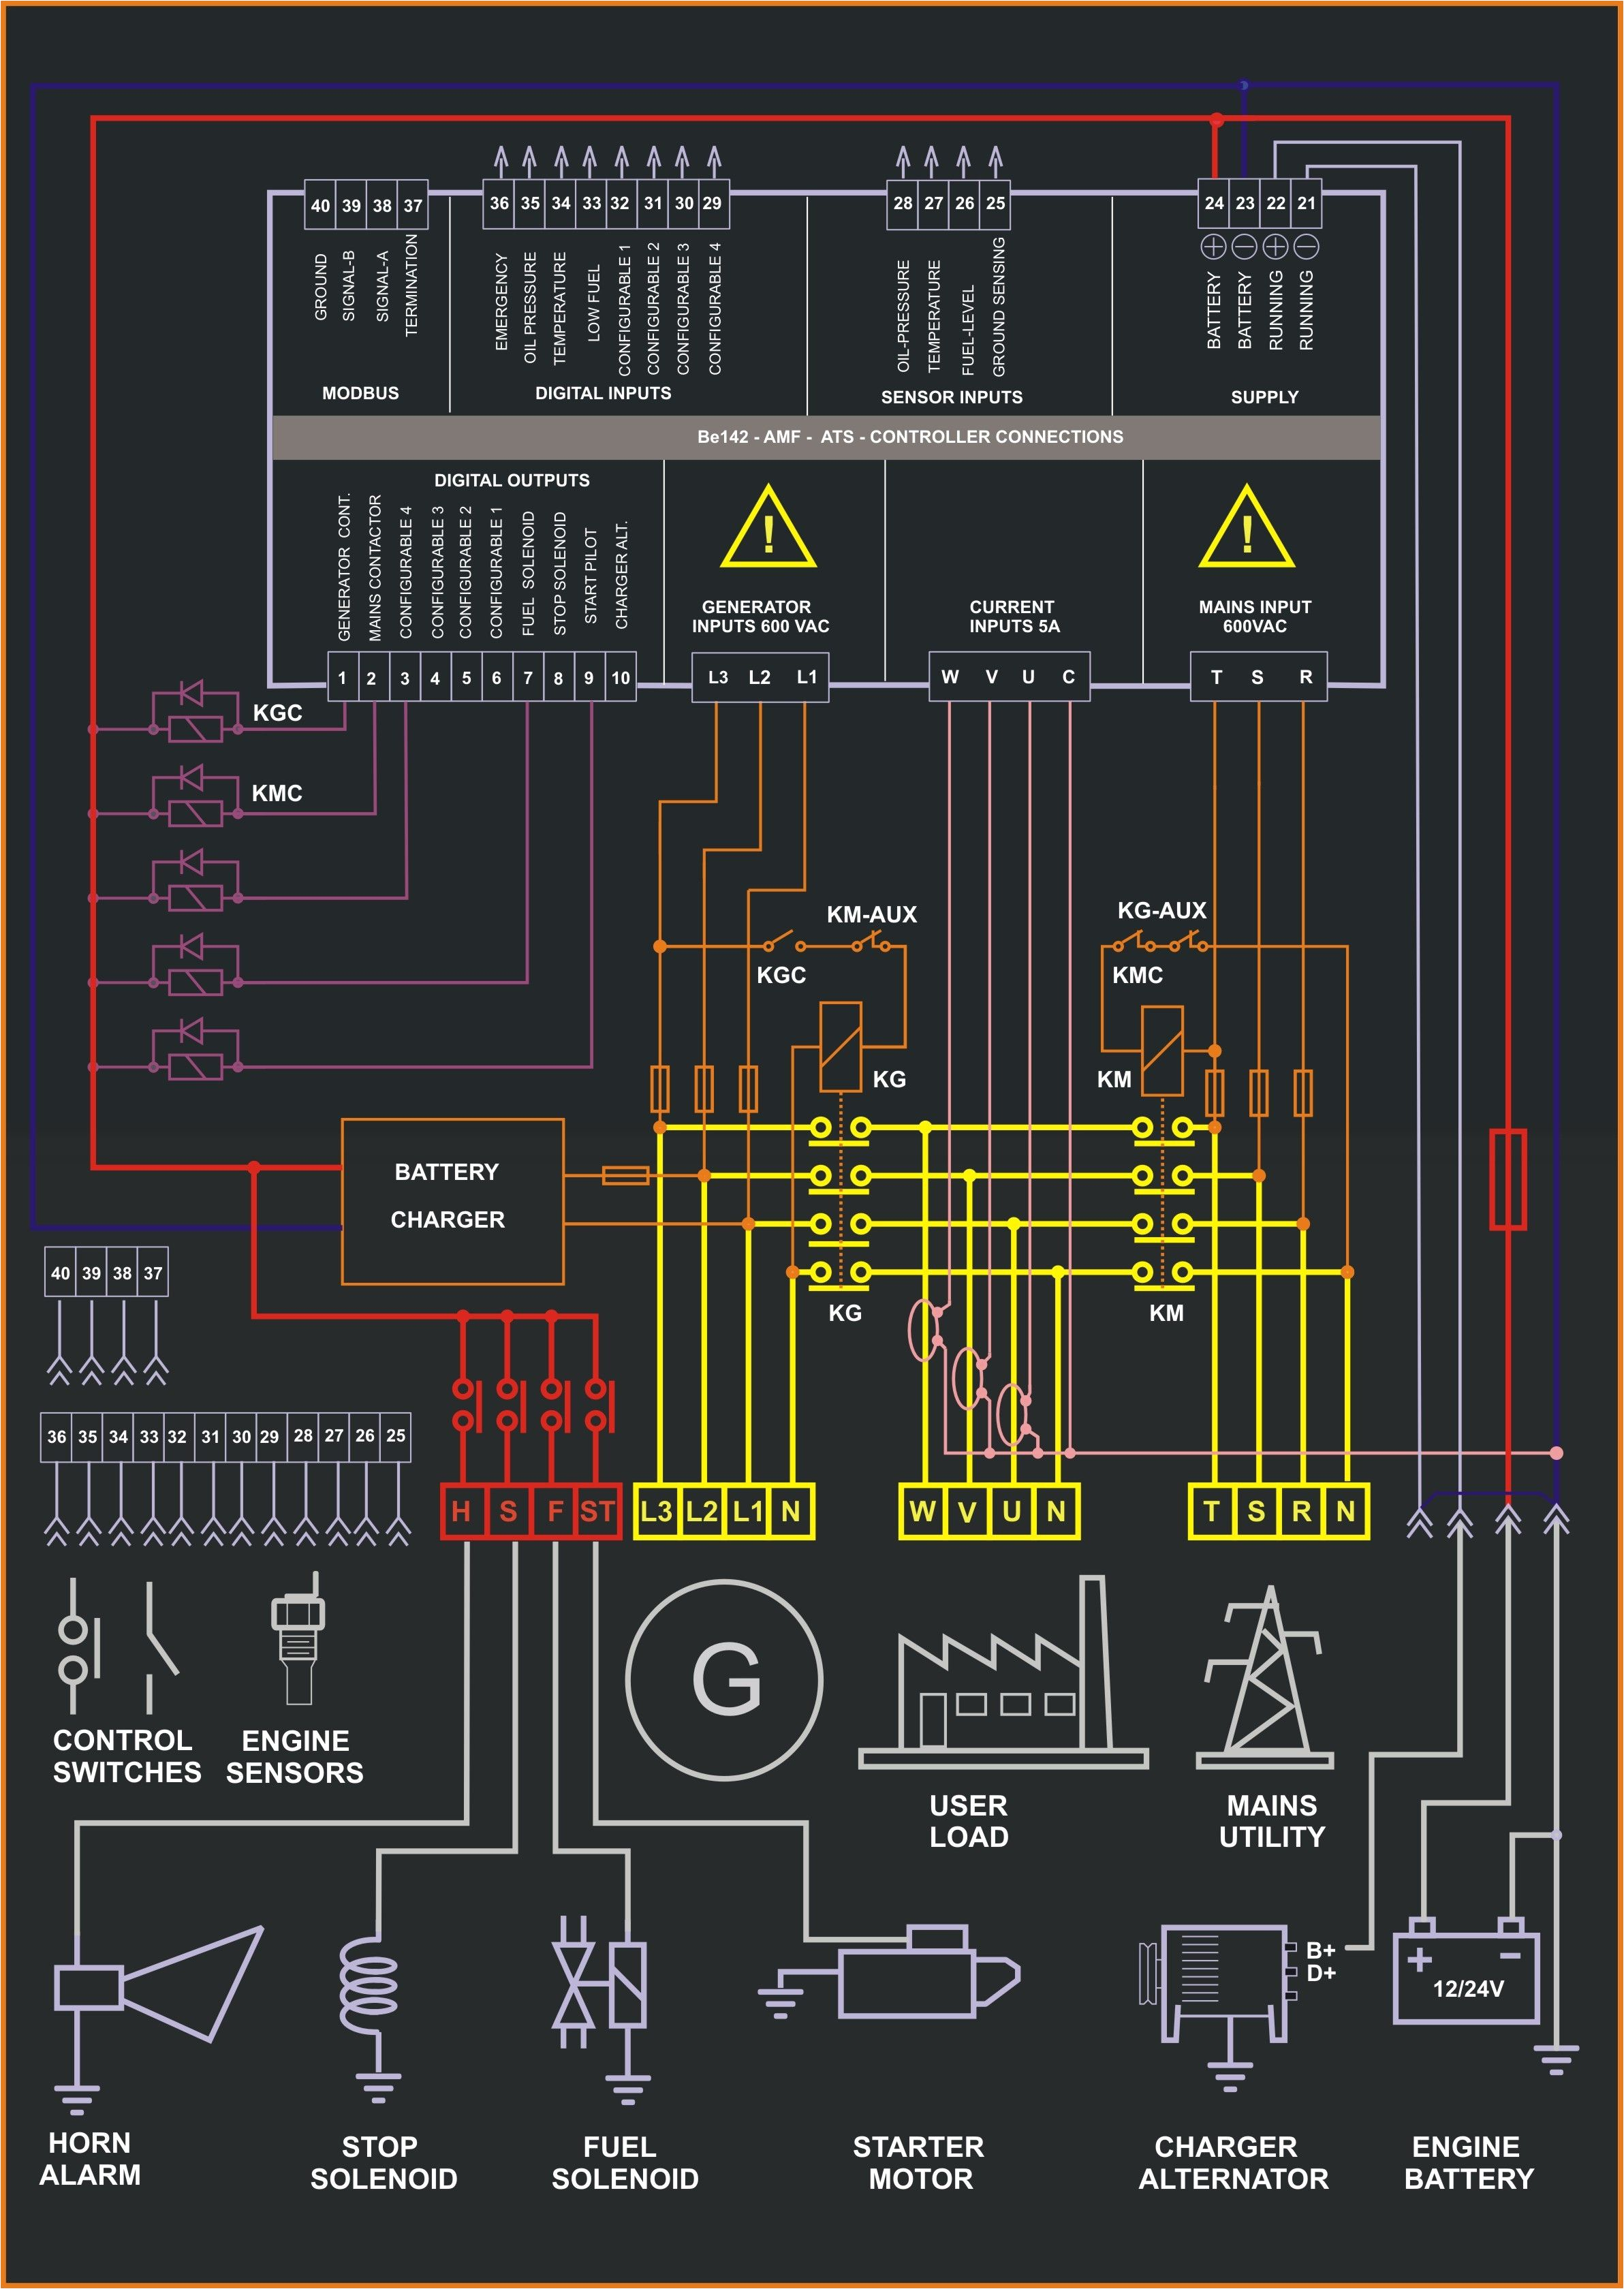 electrical panel board wiring diagram pdf fresh 41 awesome circuit electrical control panel wiring diagram pdf